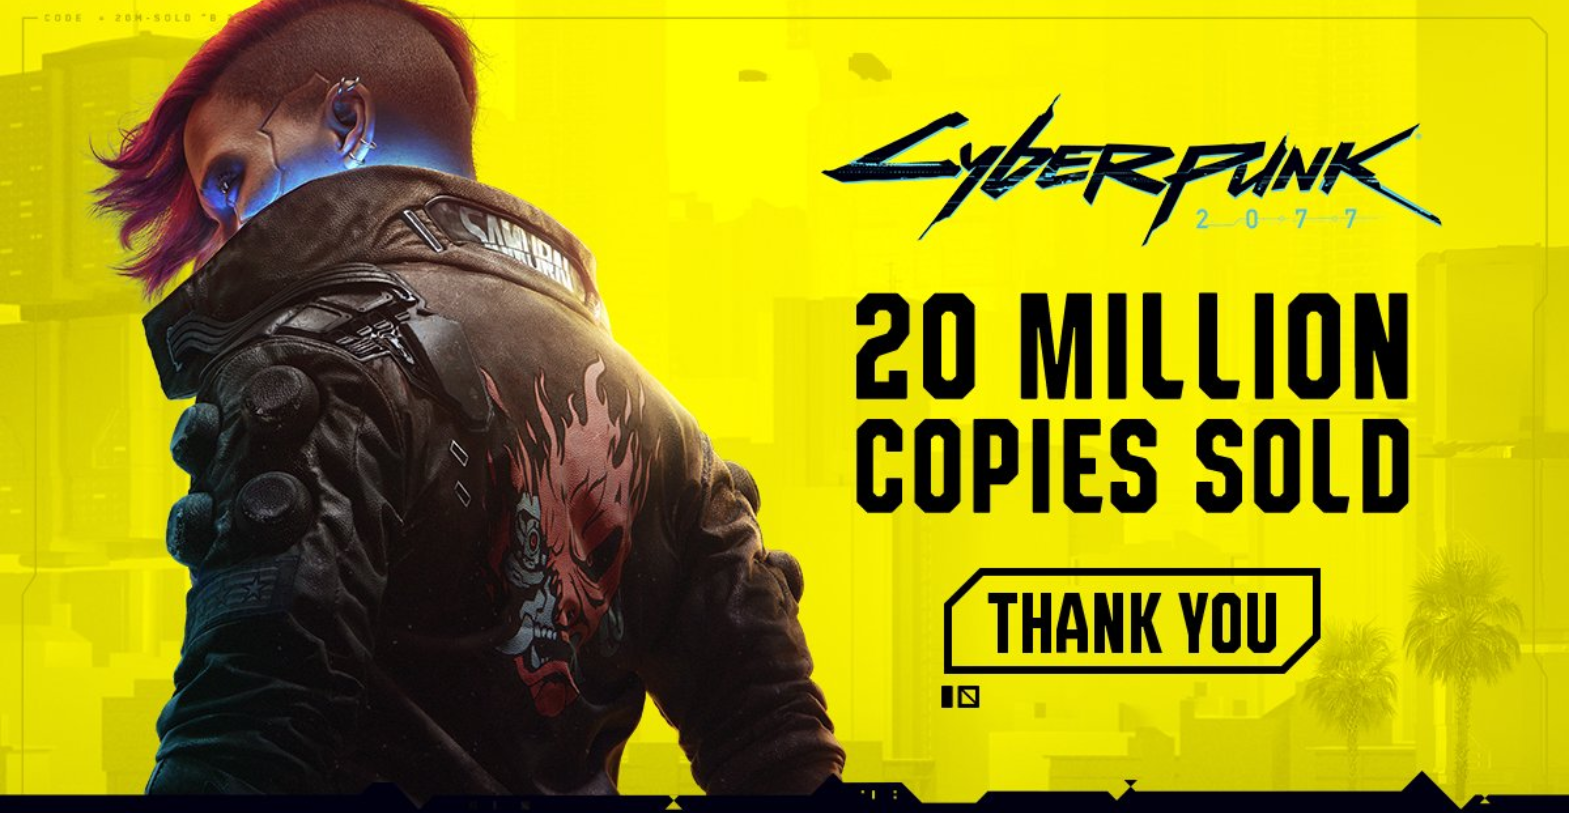 Cyberpunk 20 million copies sold